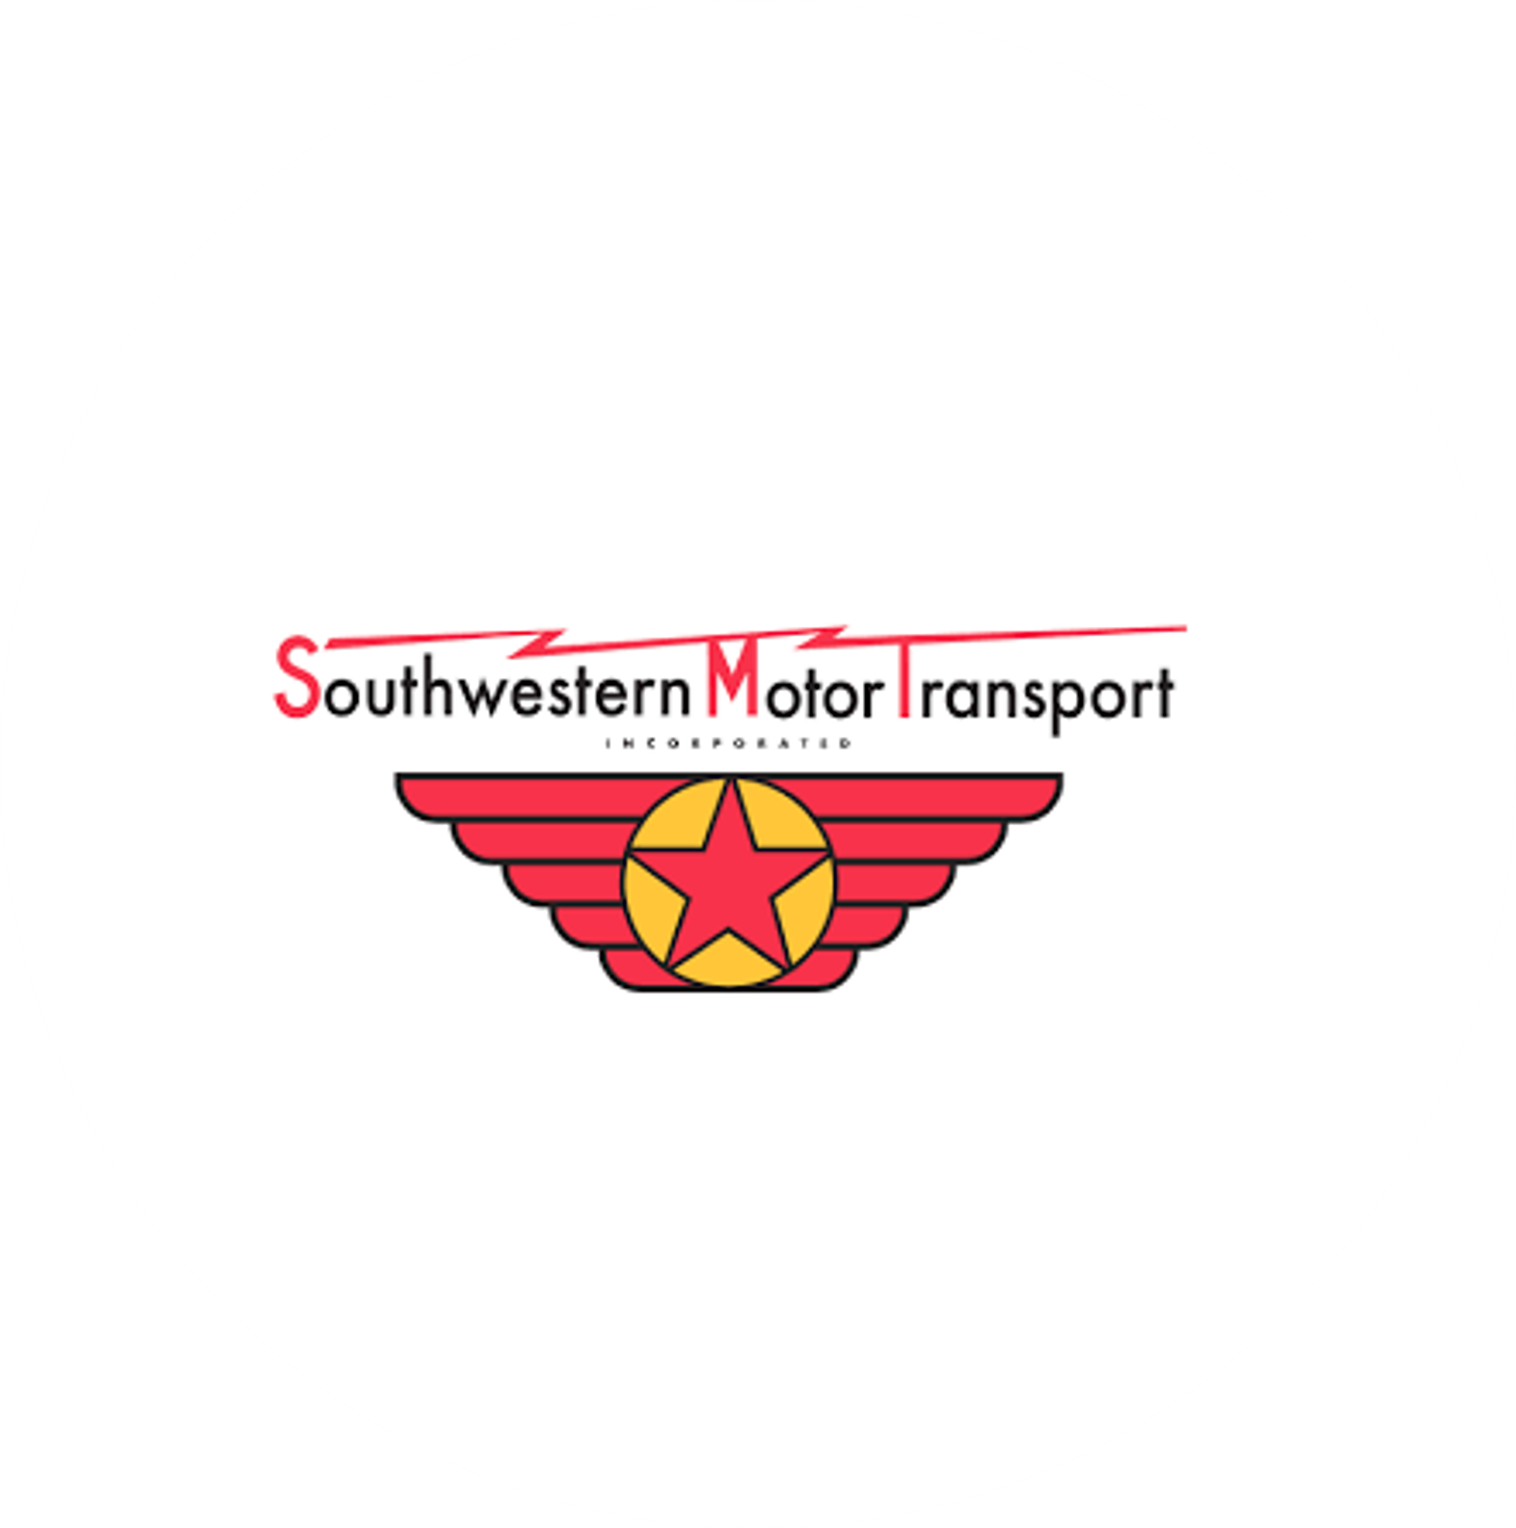 SouthwesternMotorTransport-1